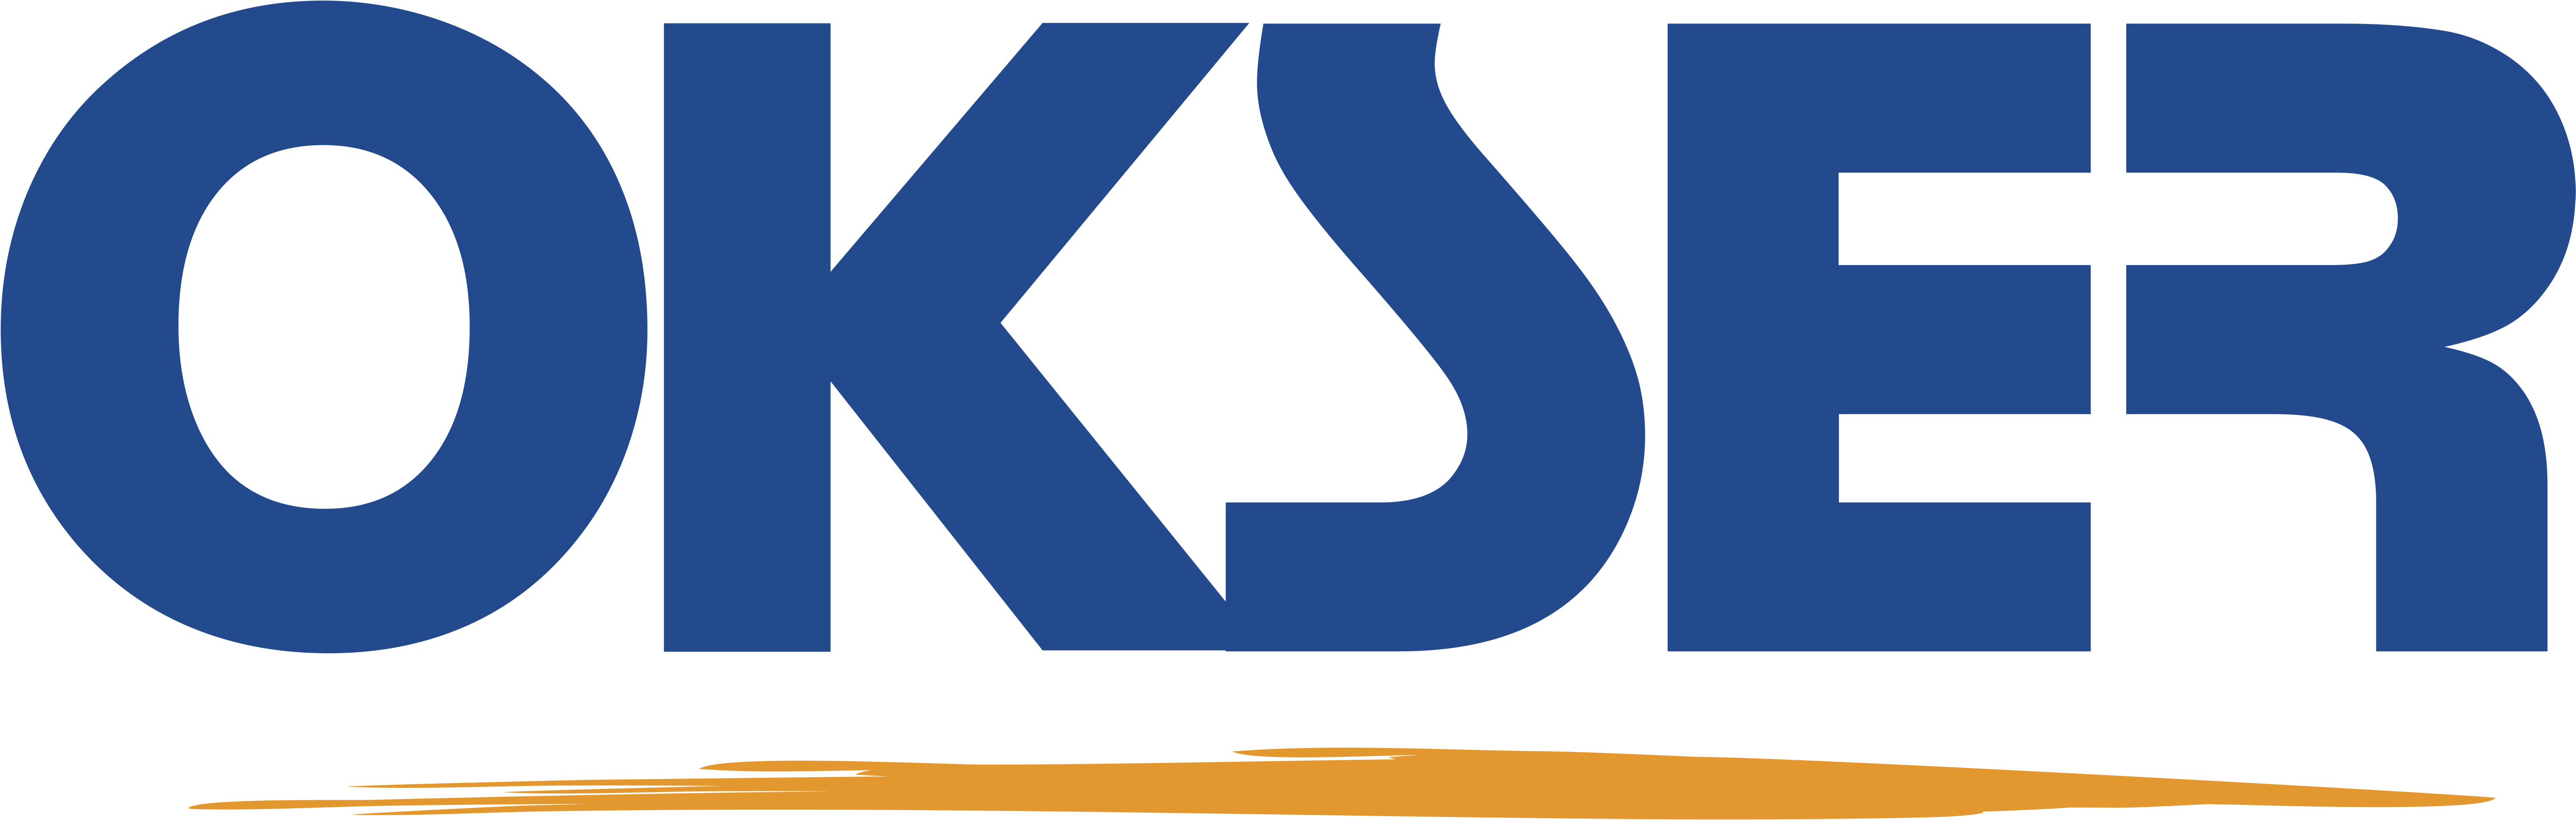 Logomarca 3187.png